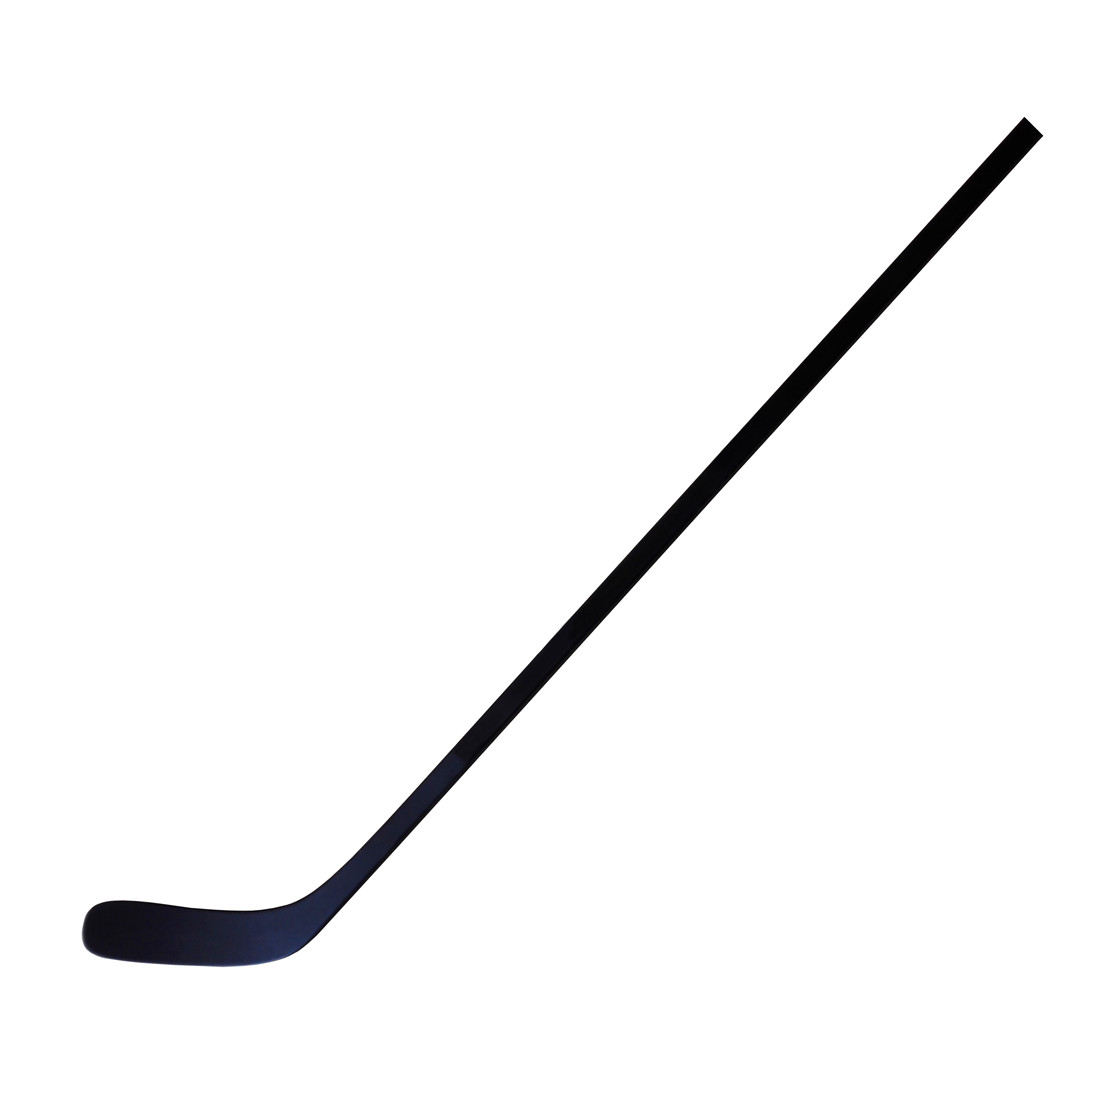 Hokey stick--Composite hockey stick